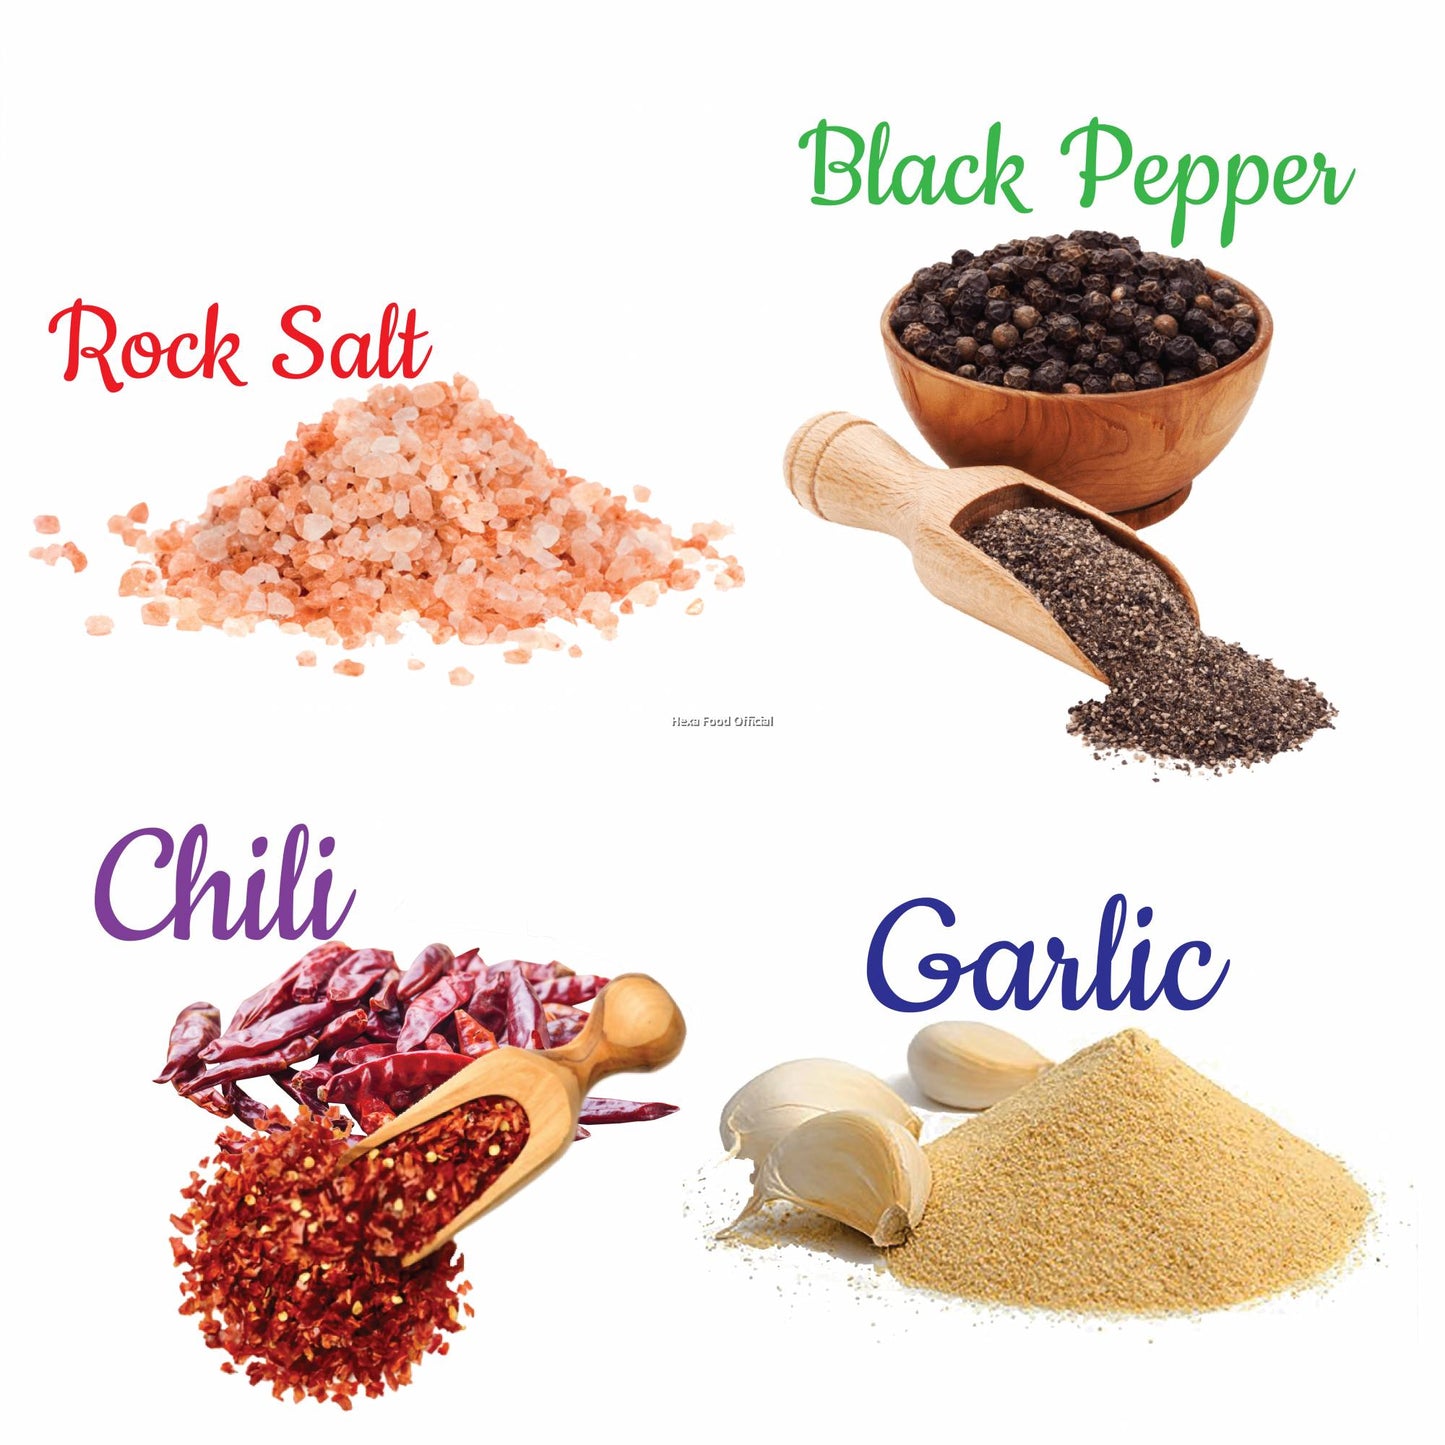 HEXA HALAL British 4IN1 Table Seasoning (85gM) Garlic, Chili, Black Pepper, Rock Salt